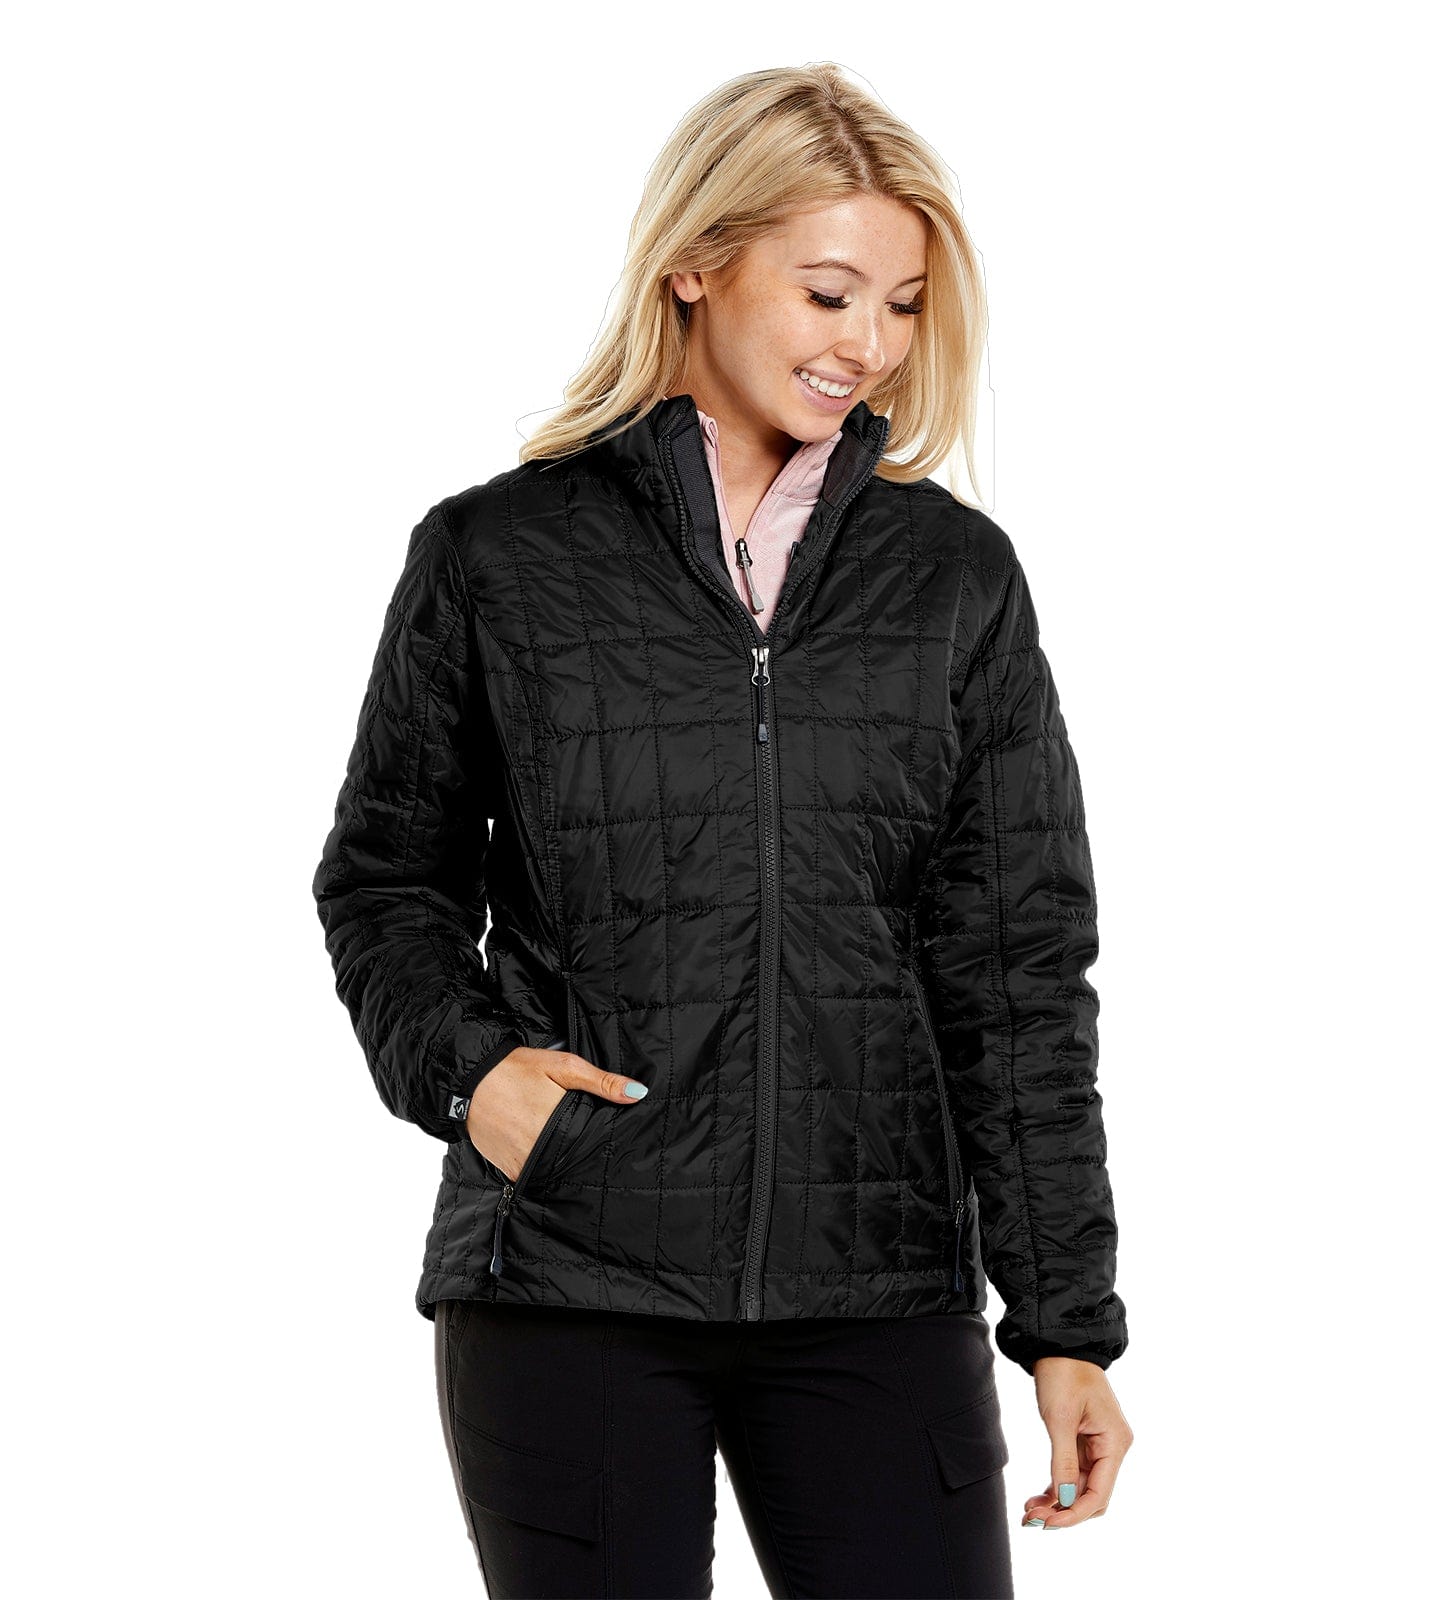 Buy GIMECEN Women's Lightweight Full Zip Soft Polar Fleece Jacket Outdoor  Recreation Coat With Zipper Pockets, Women-beige05, Small at